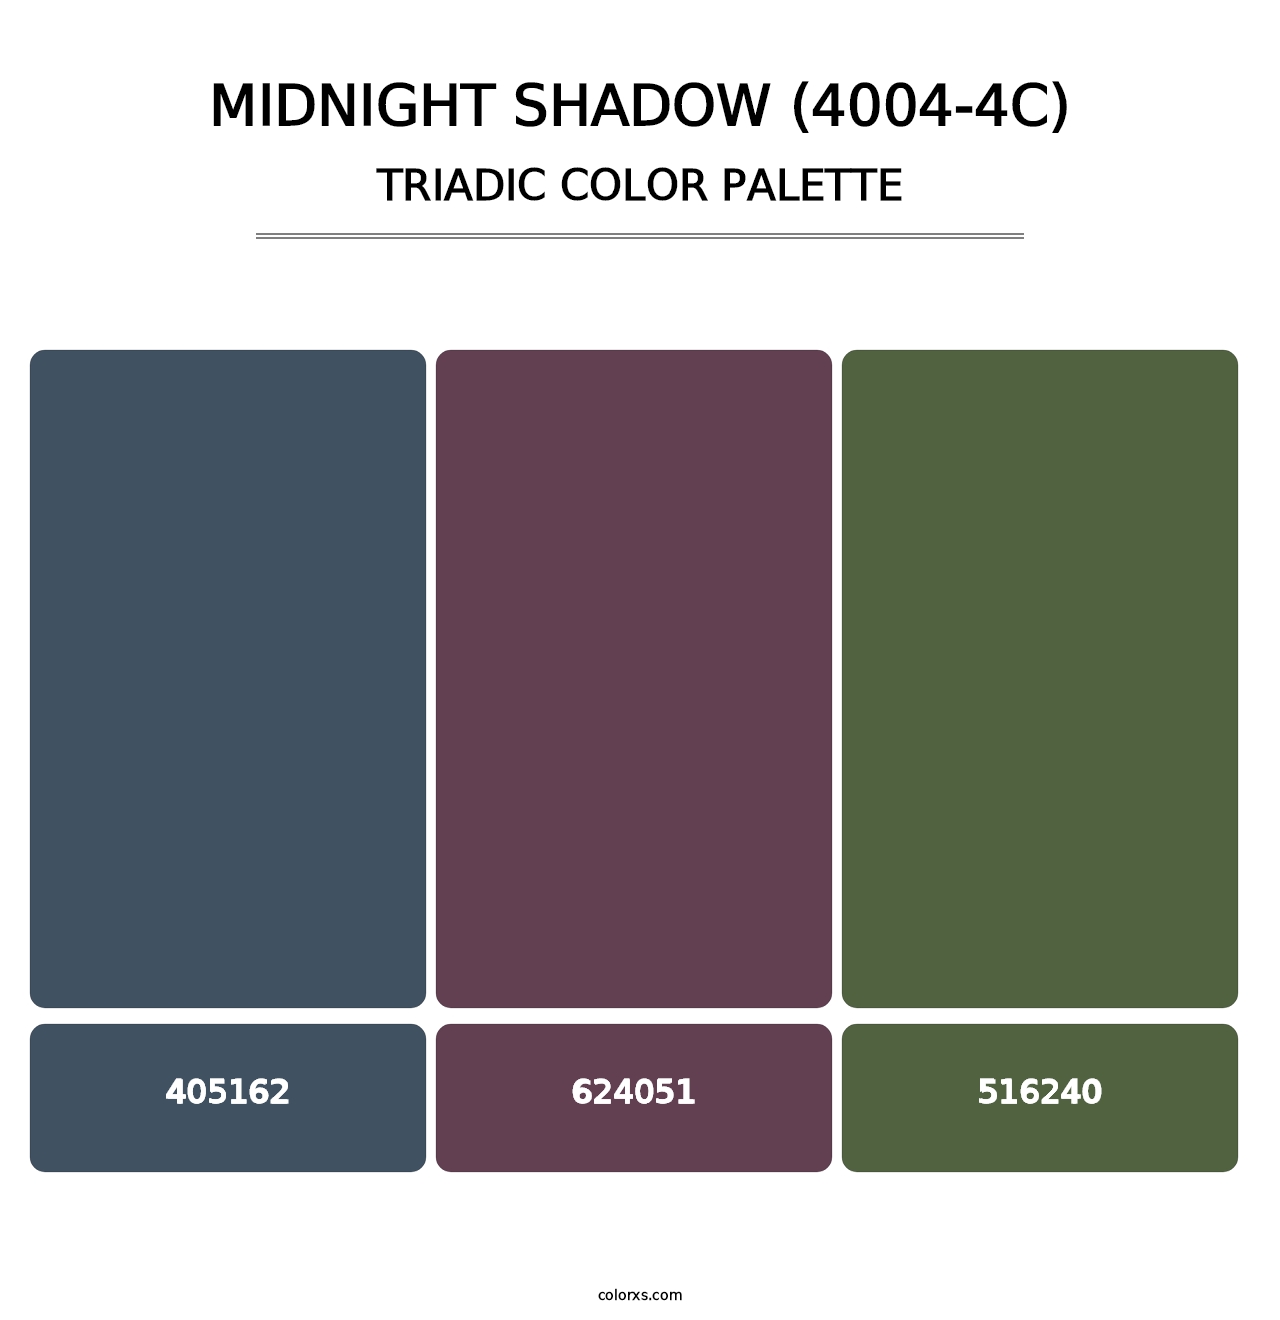 Midnight Shadow (4004-4C) - Triadic Color Palette